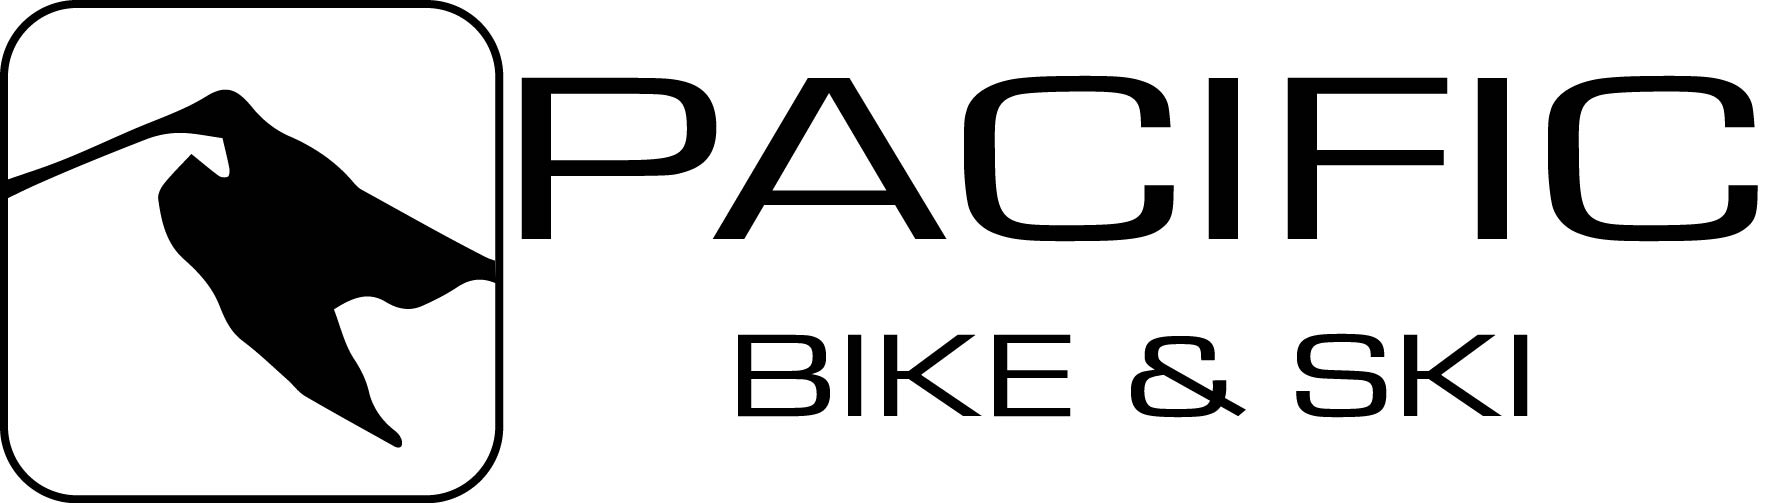 Pacific Bike & Ski Home Page